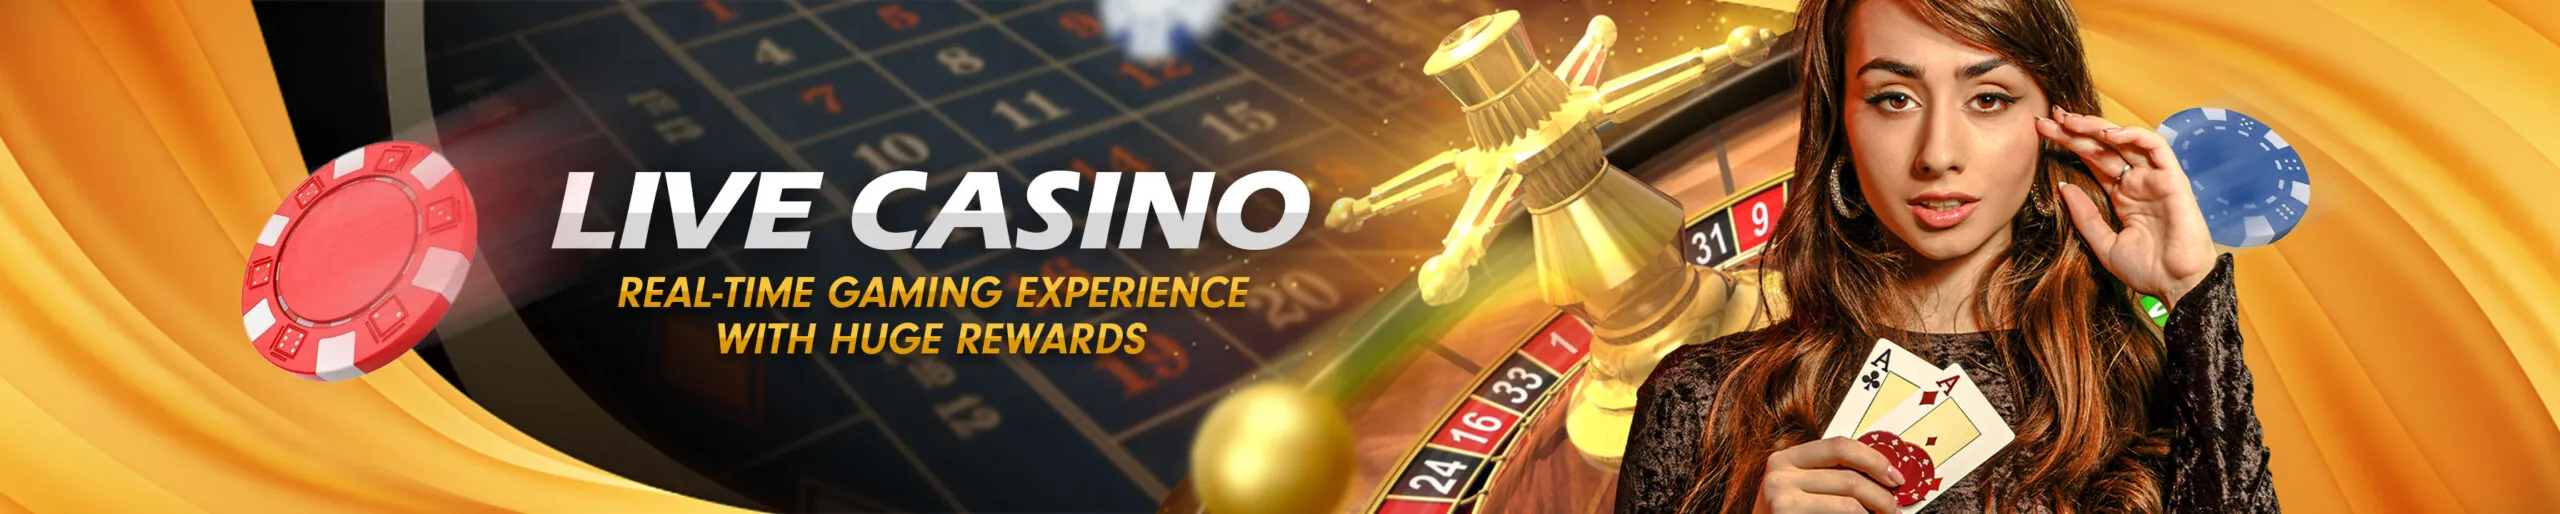 jeetbuzz online casino